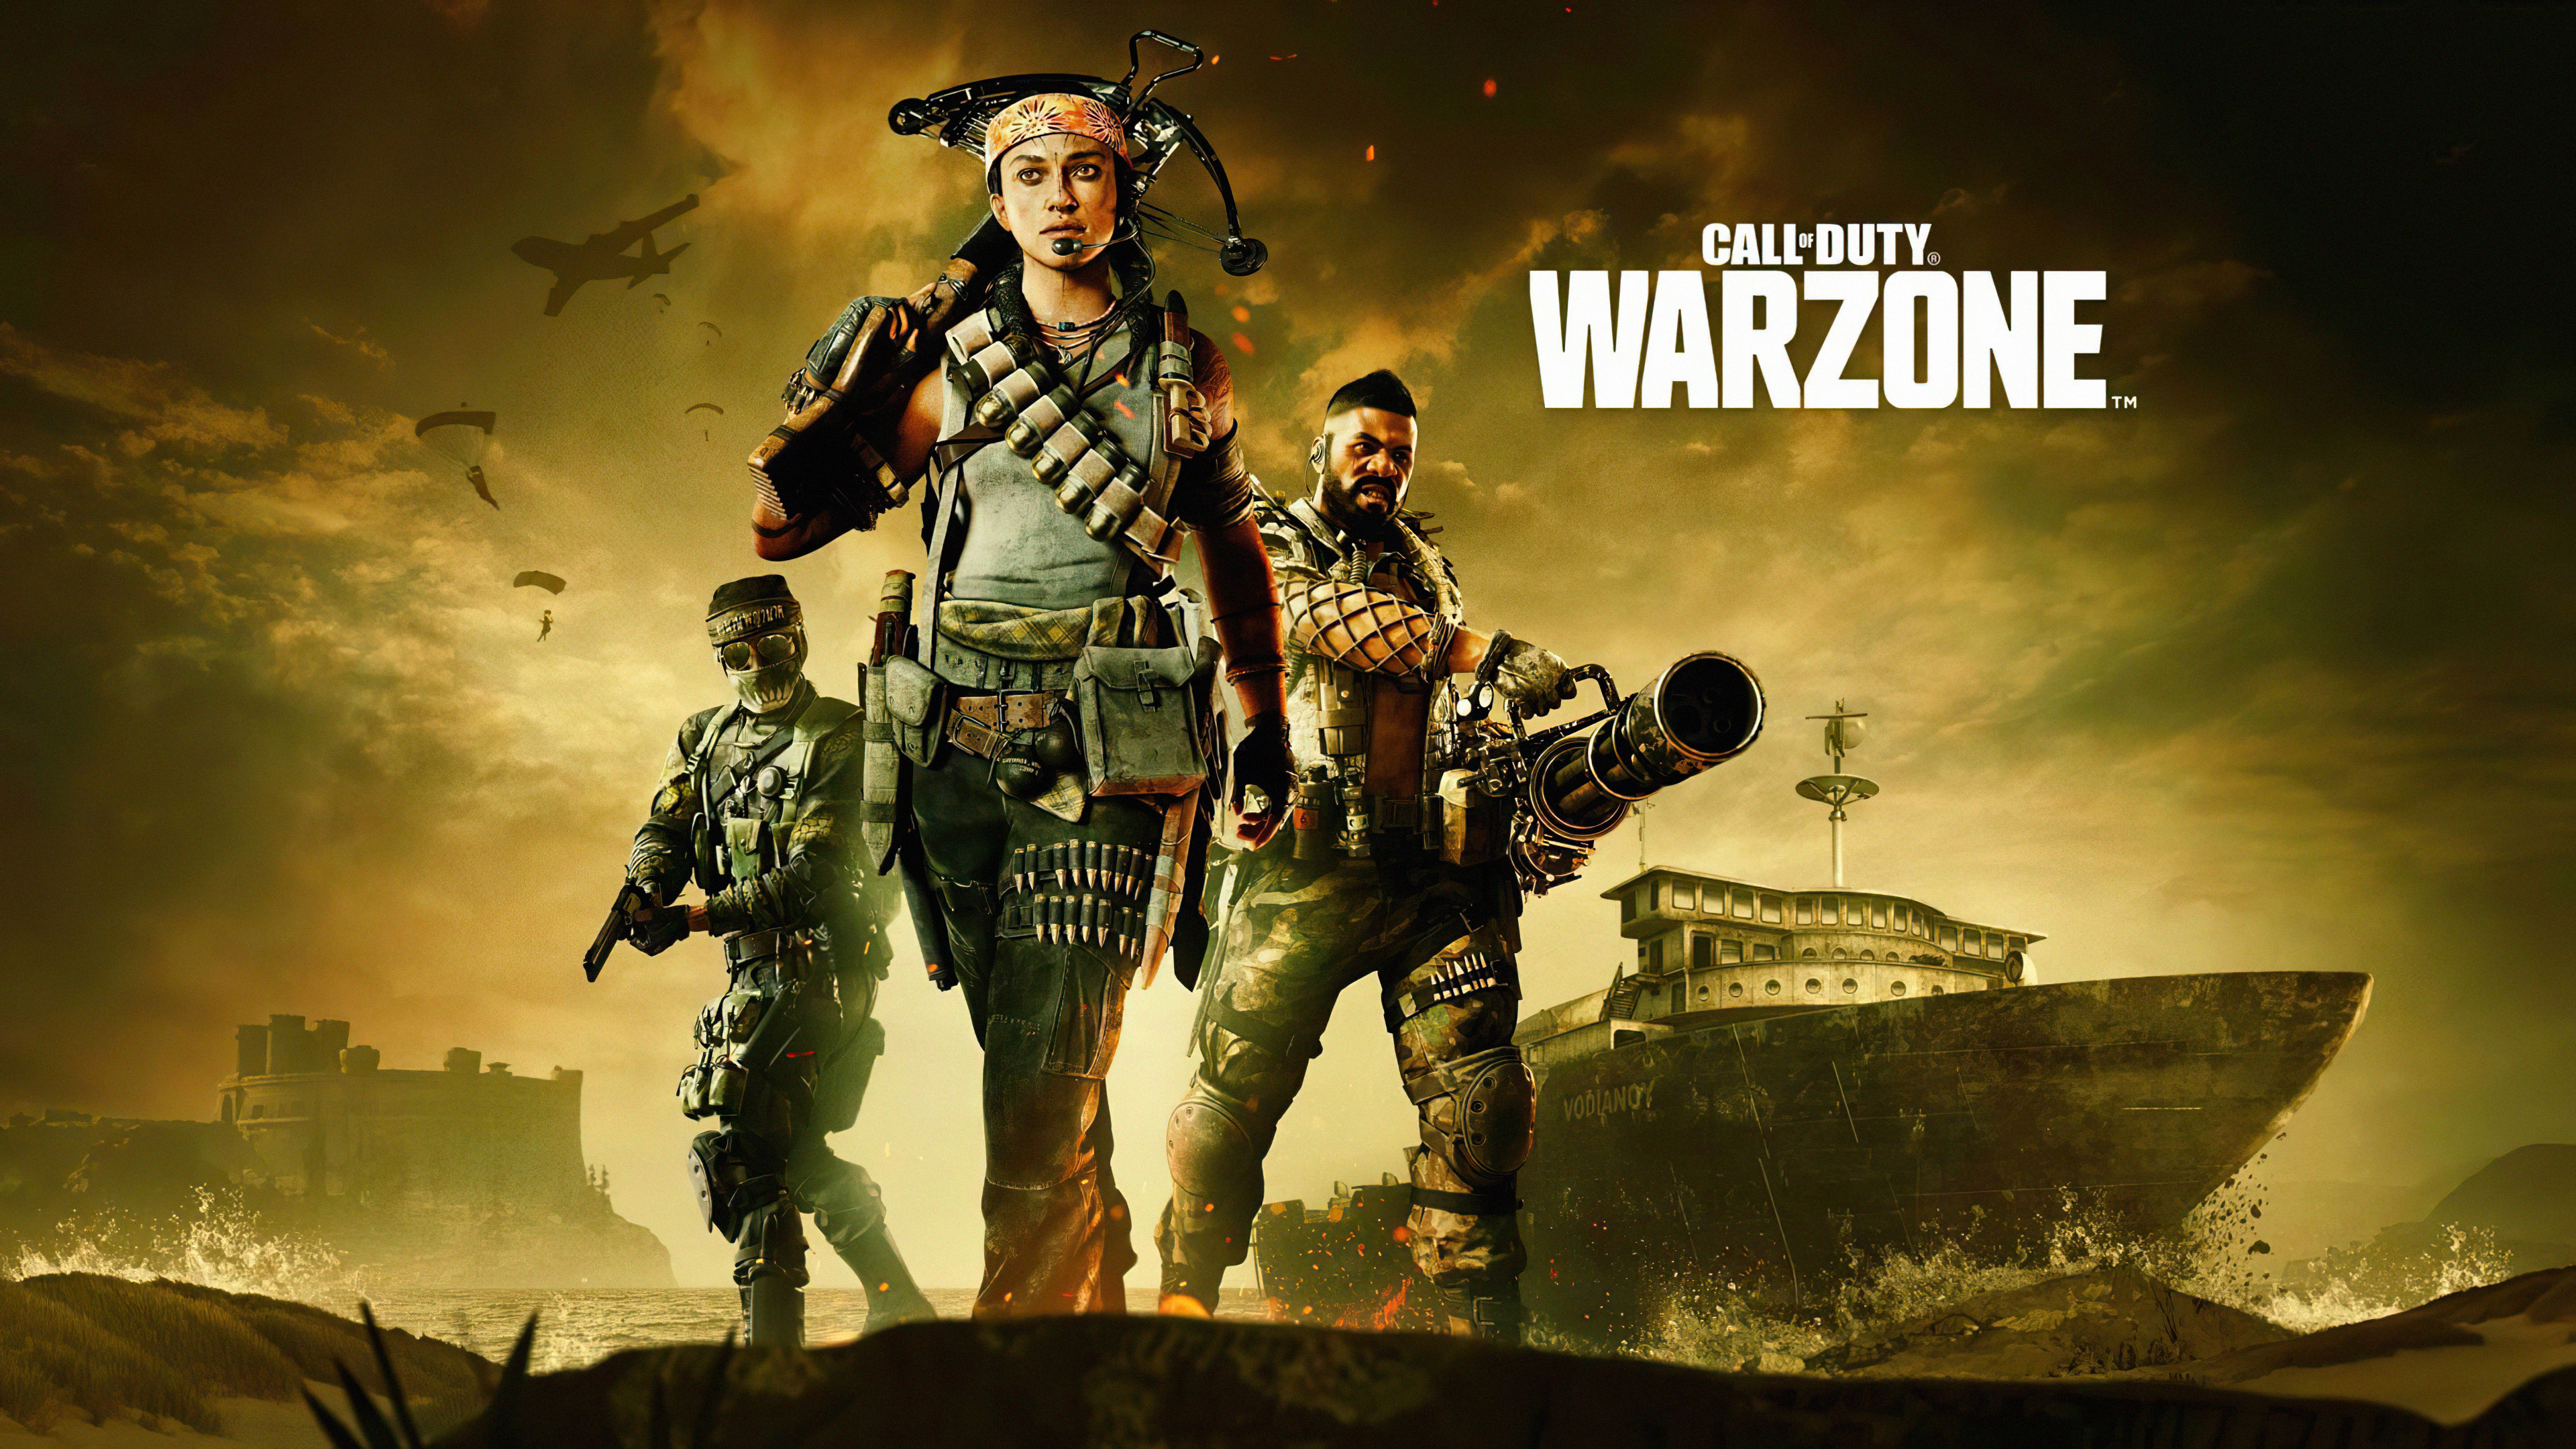 Cách fix khắc phục một số lỗi hay gặp trong Call of Duty Warzone